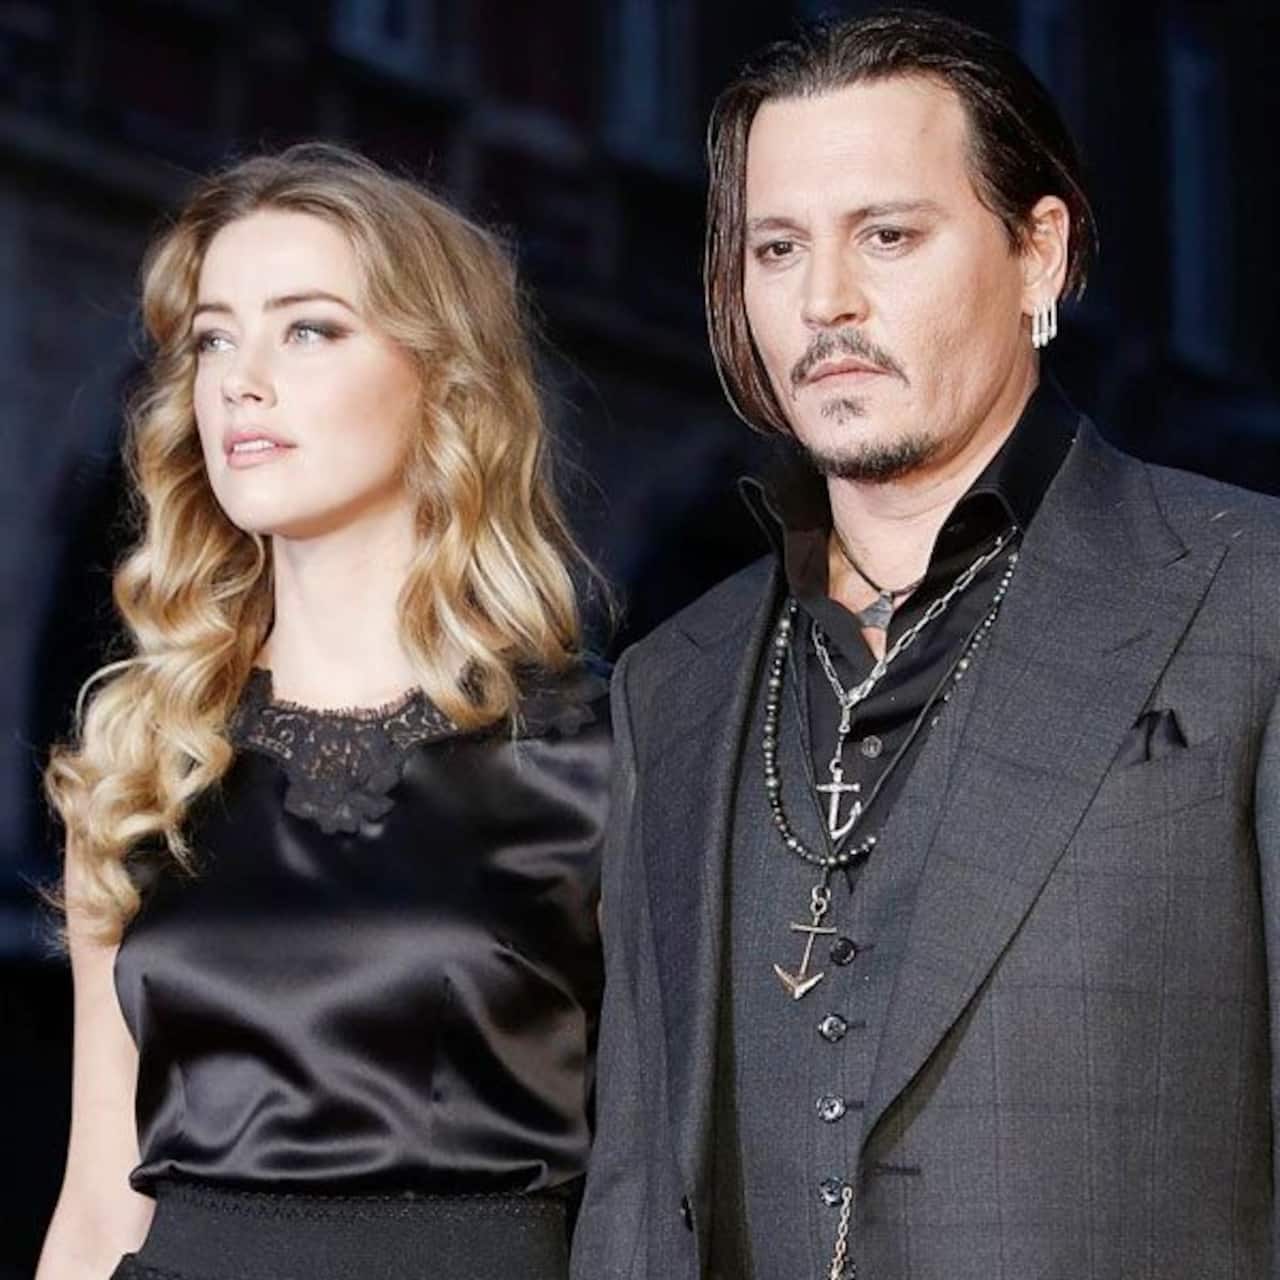 6 shocking revelations from the Johnny Depp vs Amber Heard trial